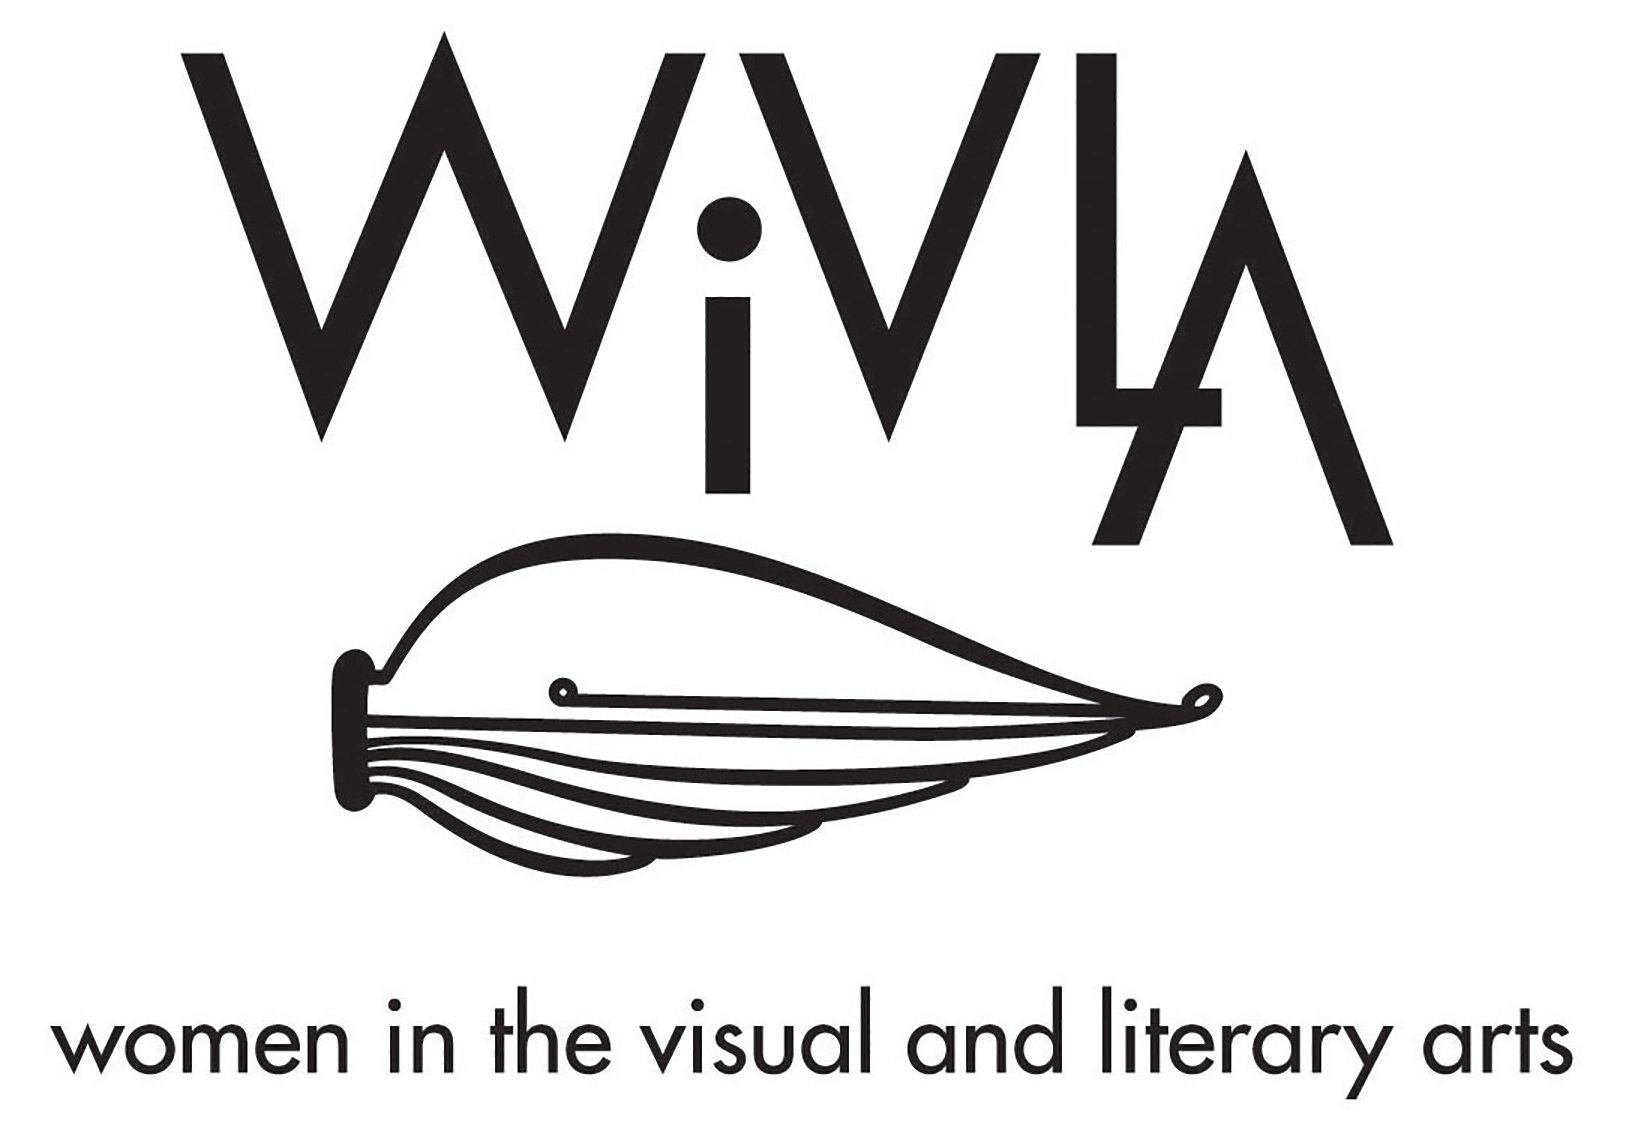 wivla logo lrg.jpg 1626x1134 q85 subsampling 2 upscale